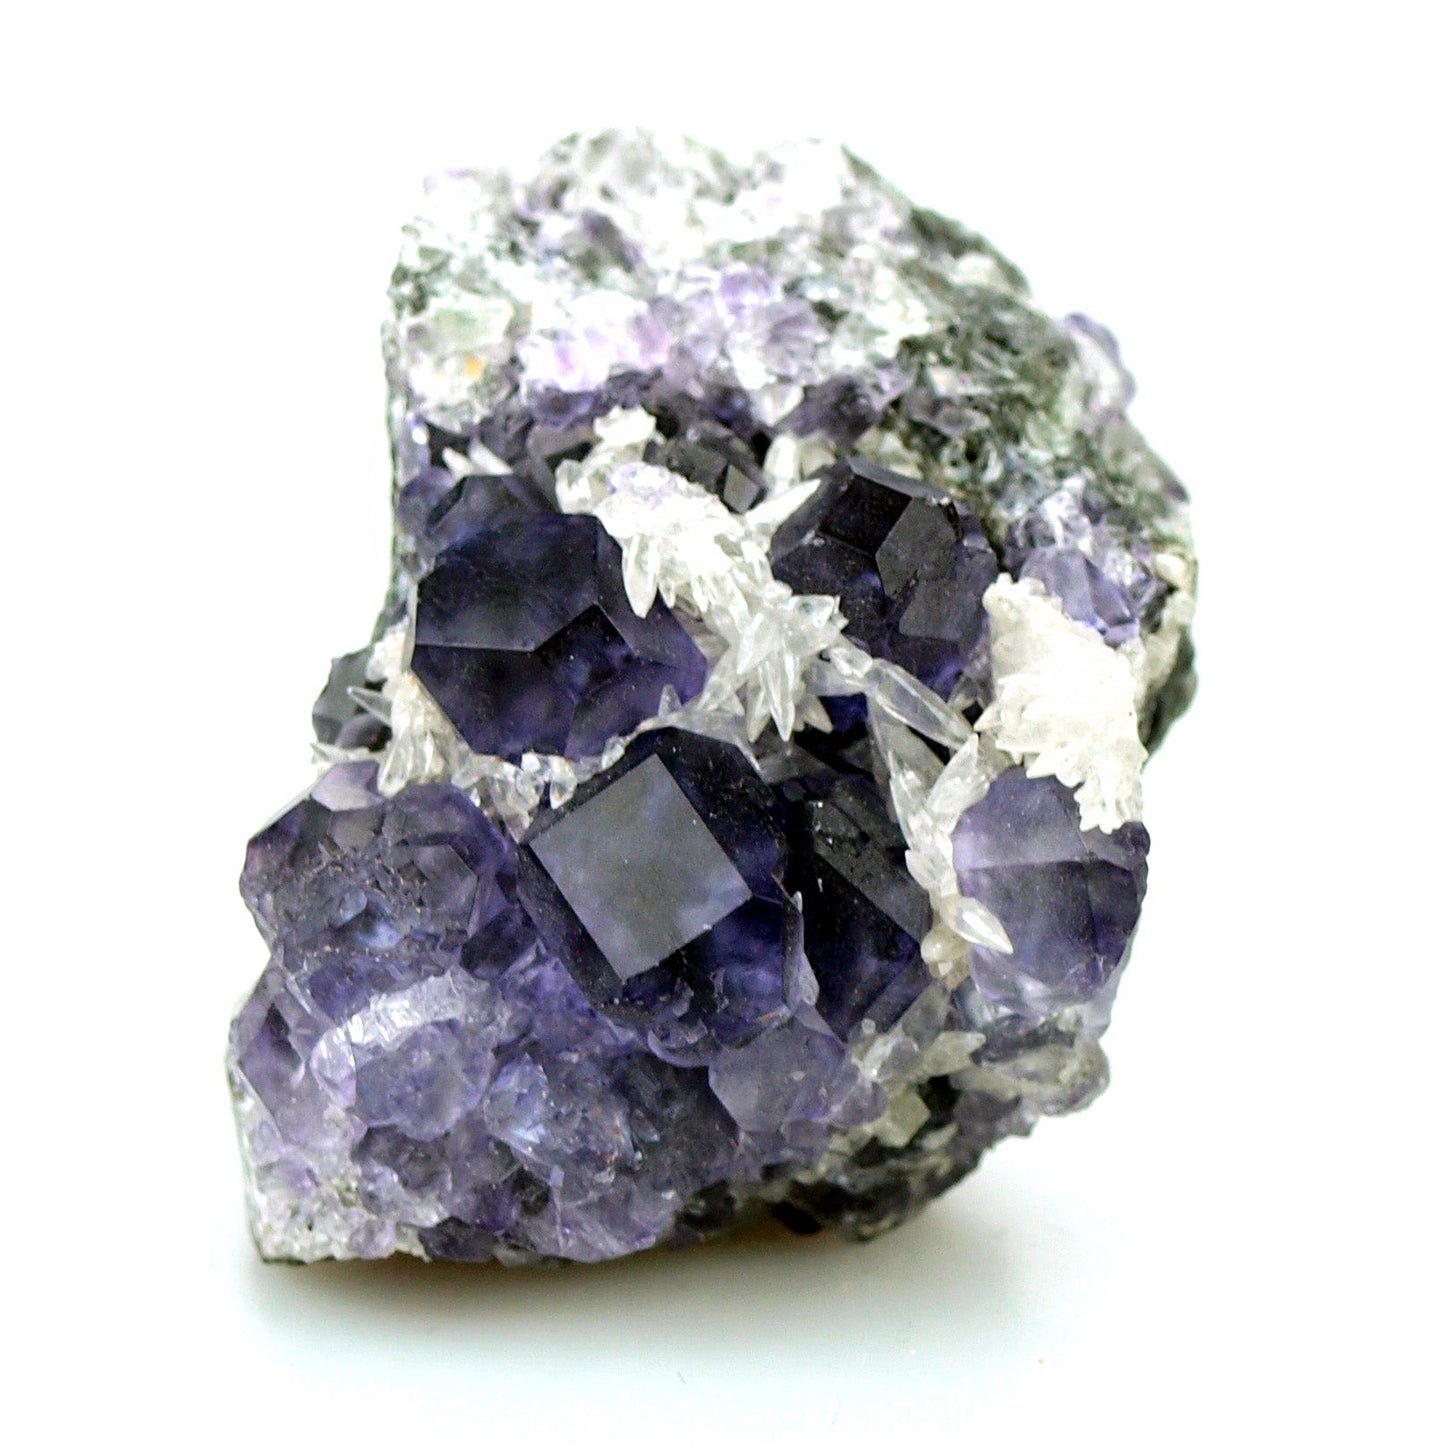 Fluorite with calcite